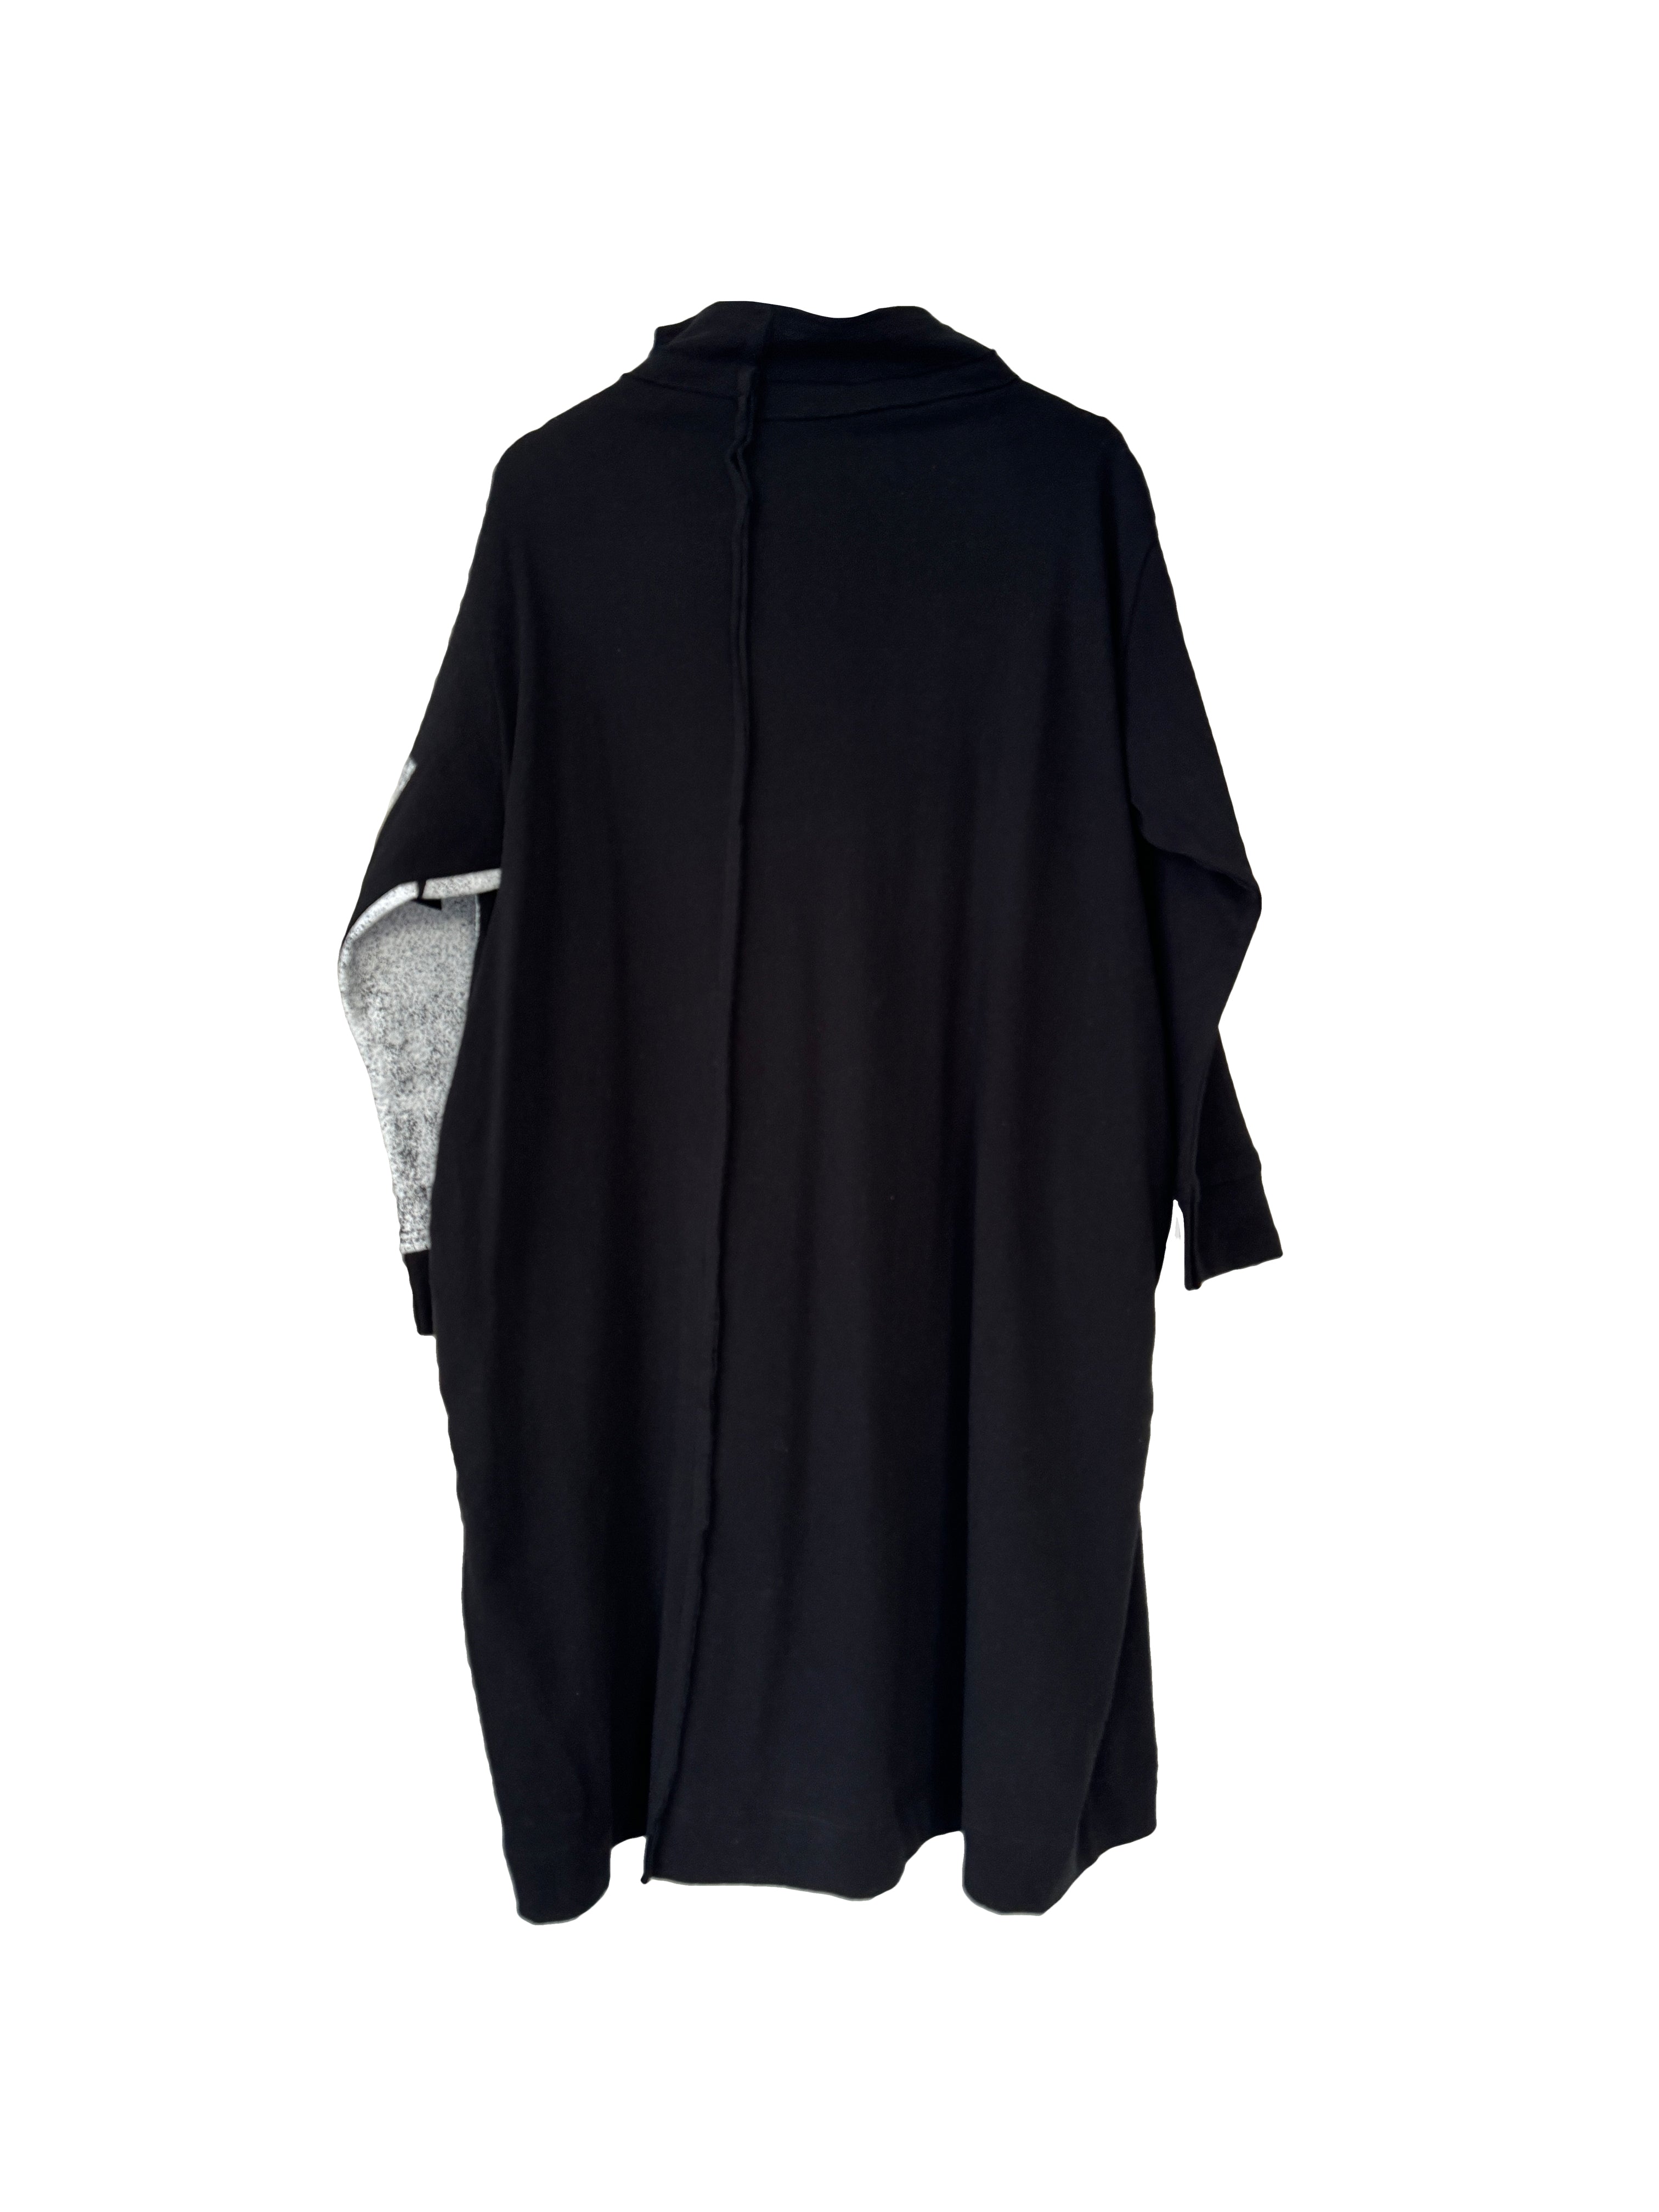 TUNIC DRESS ABSTRACT PRINT BLACK